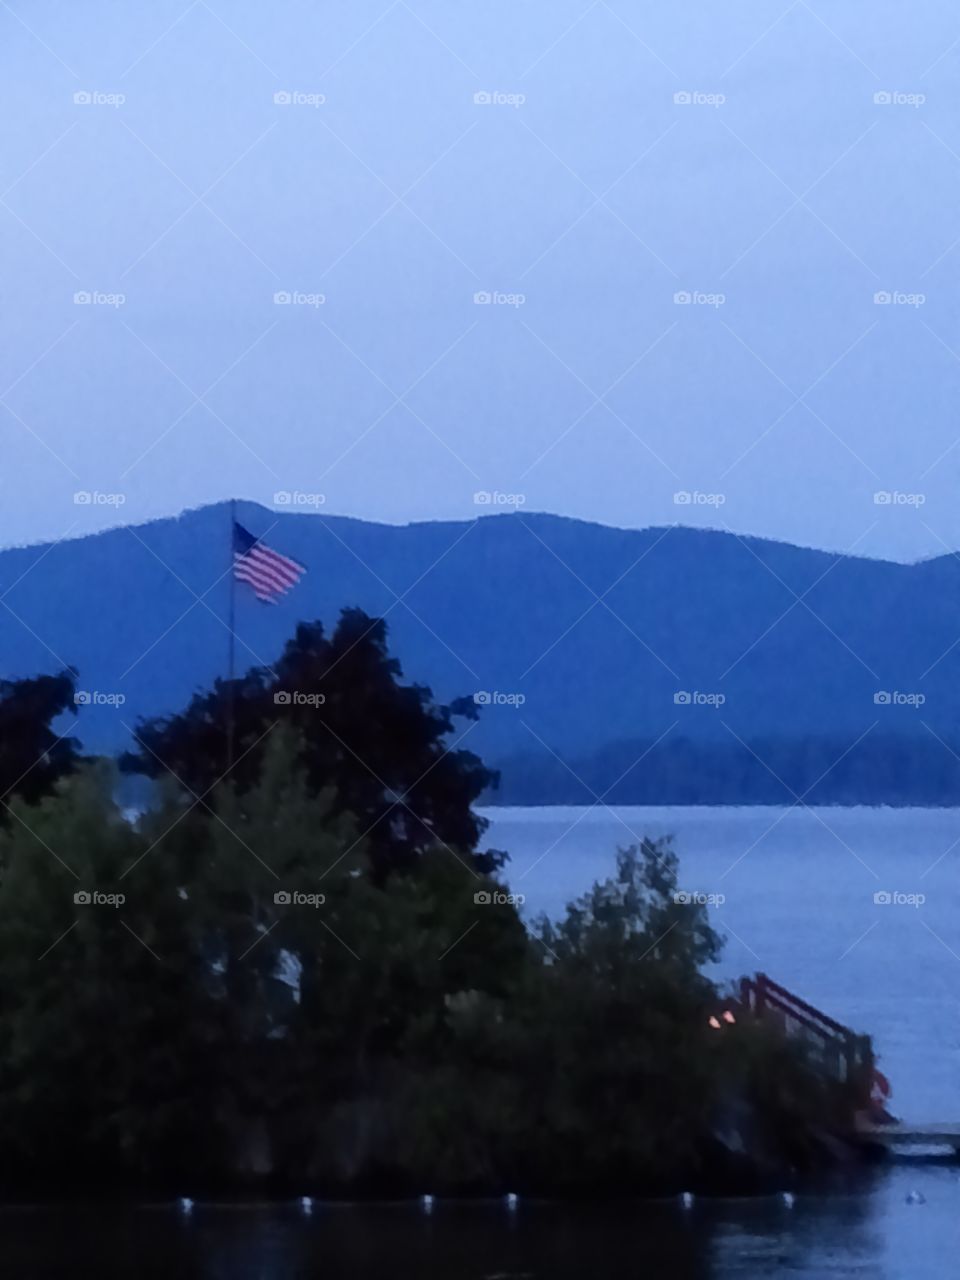 flags at dusk